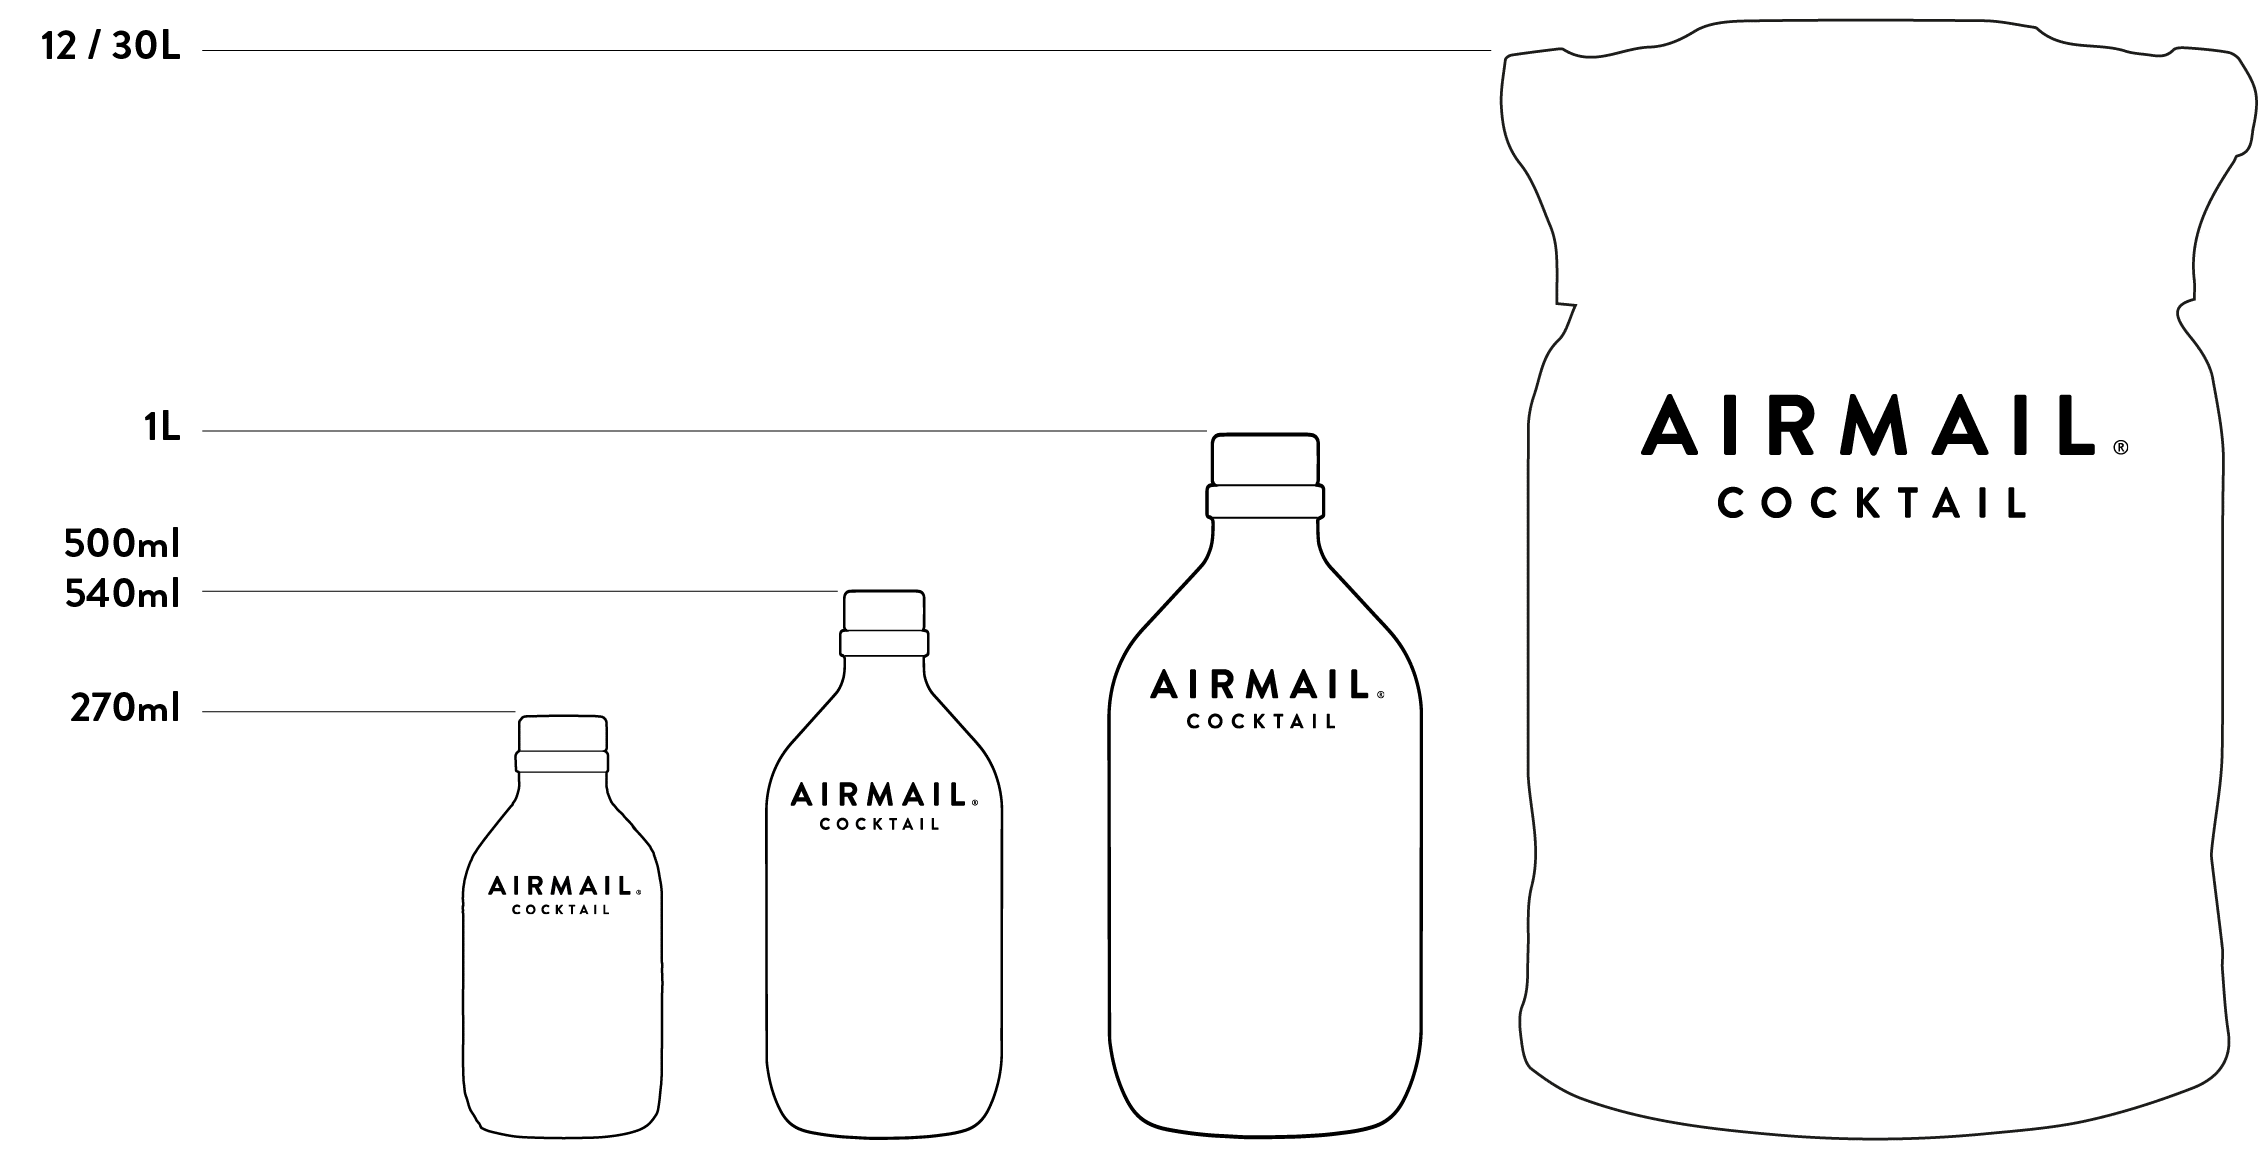 airmail cocktail formats bouteille fut